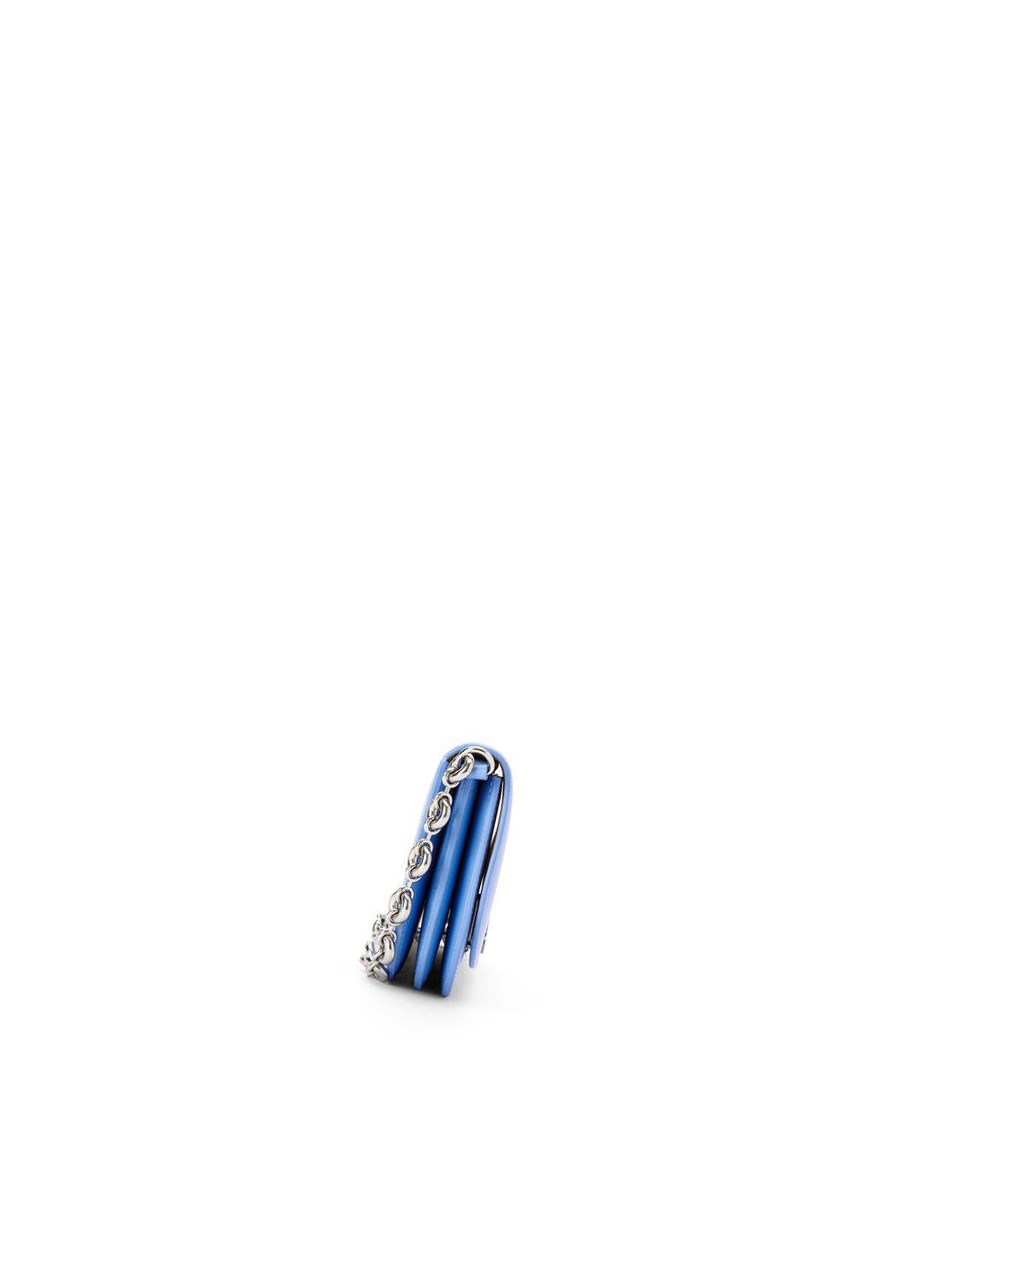 Loewe Goya Long Chain Clutch in silk calfskin Celestine Blue | FA7638124